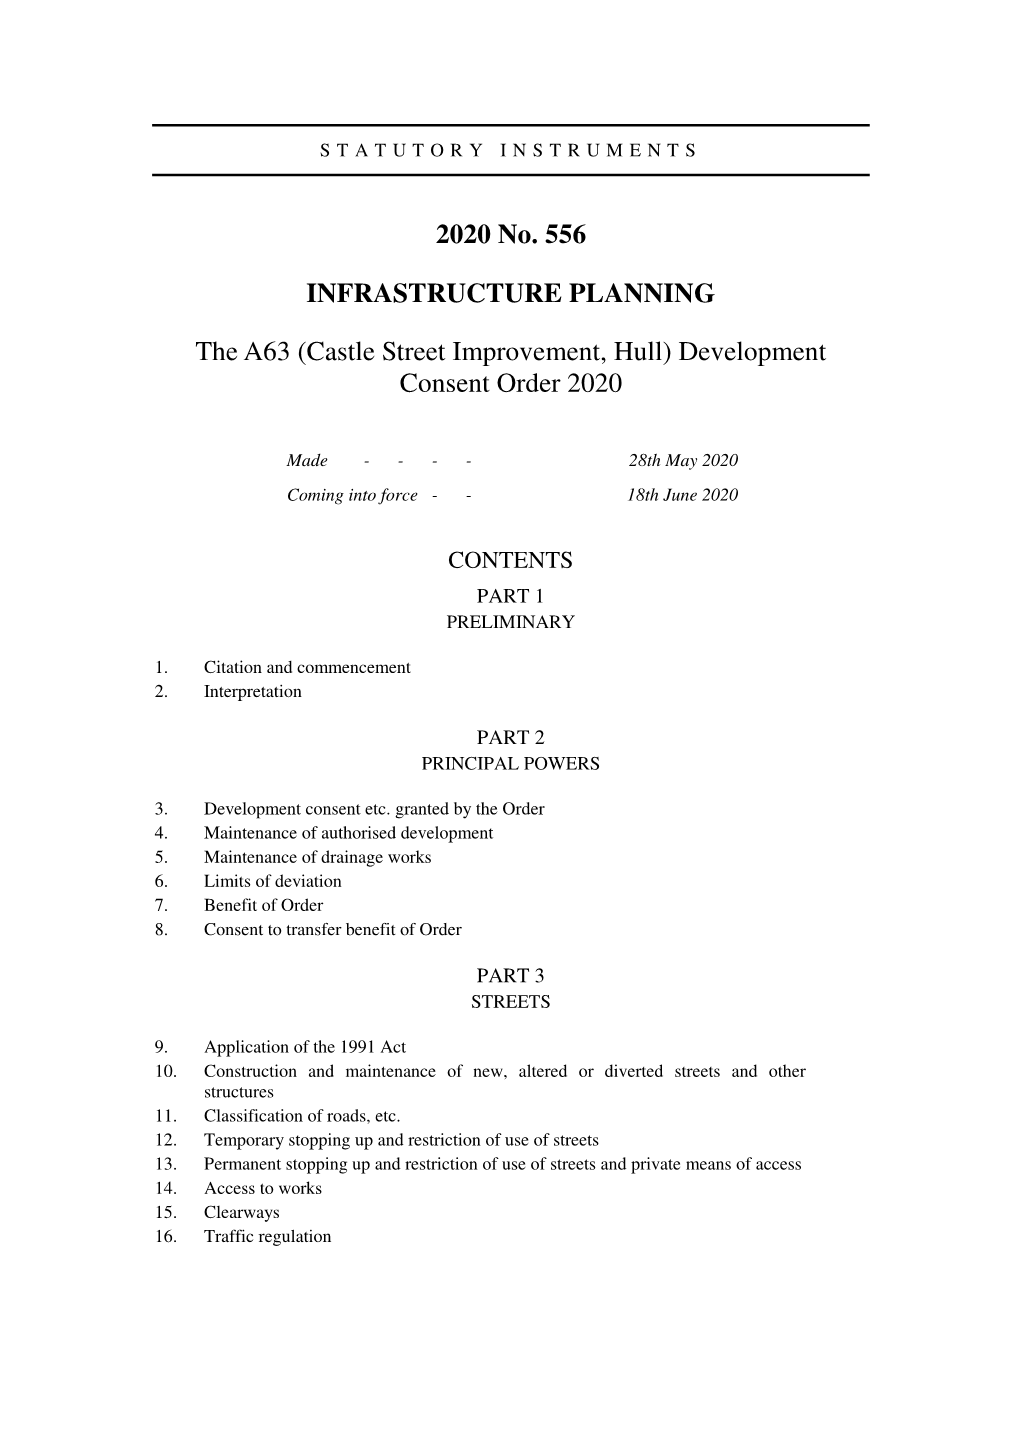 The A63 (Castle Street Improvement, Hull) Development Consent Order 2020